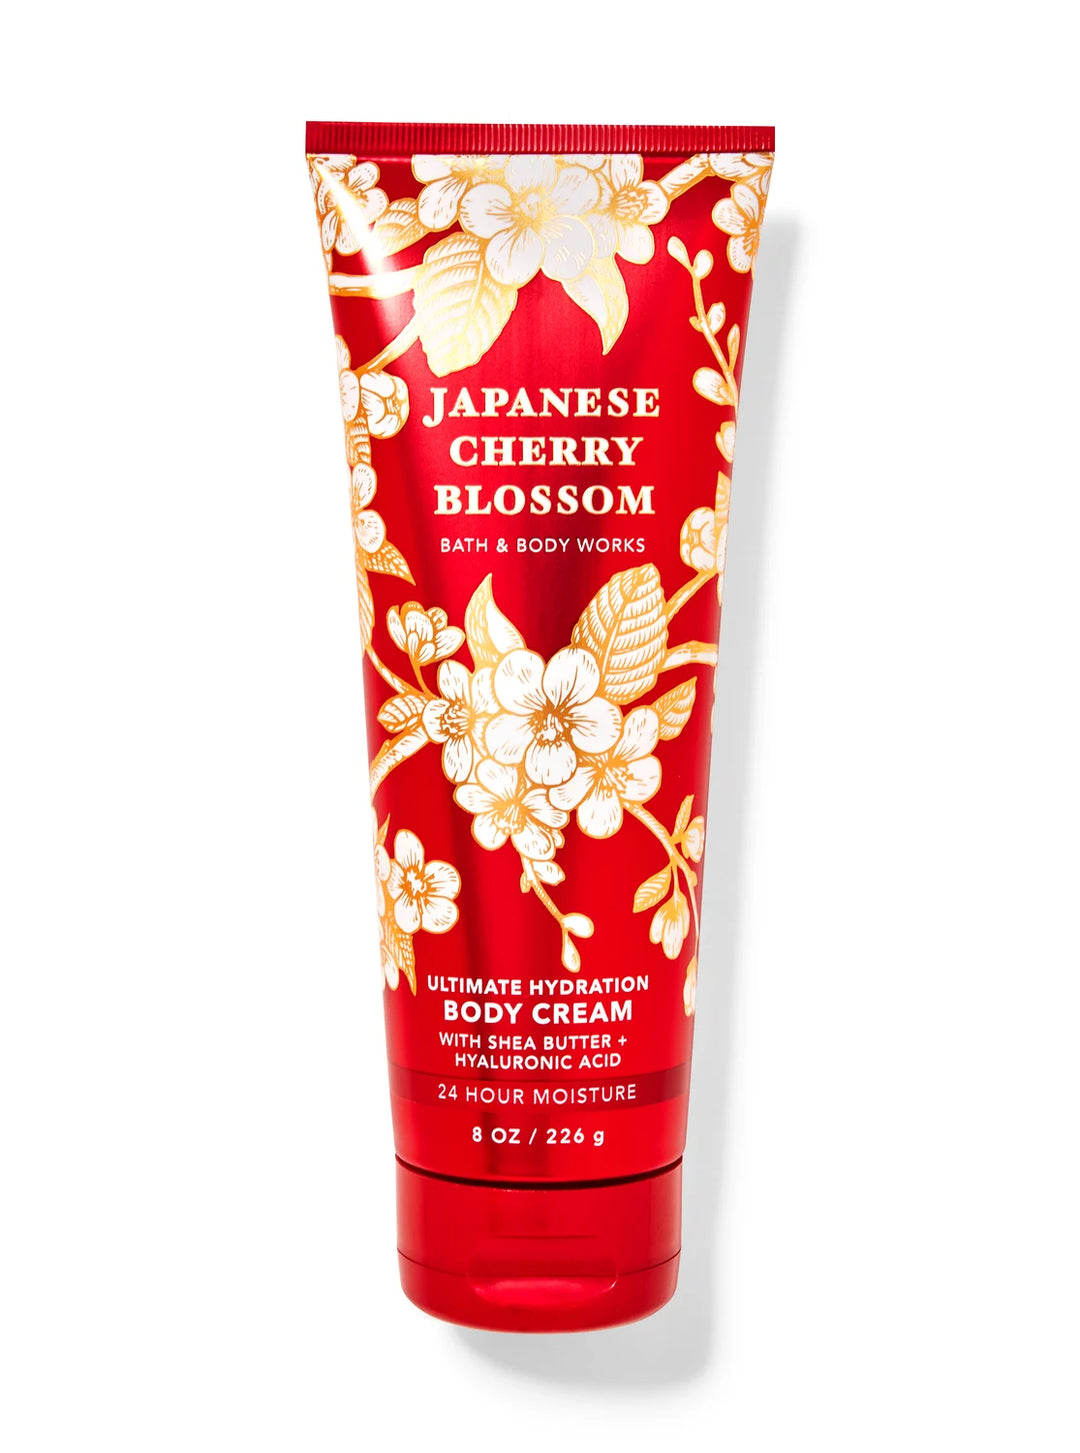 Bath & Body works Japanese Cherry Blossom Ultimate Hydration Body Cream